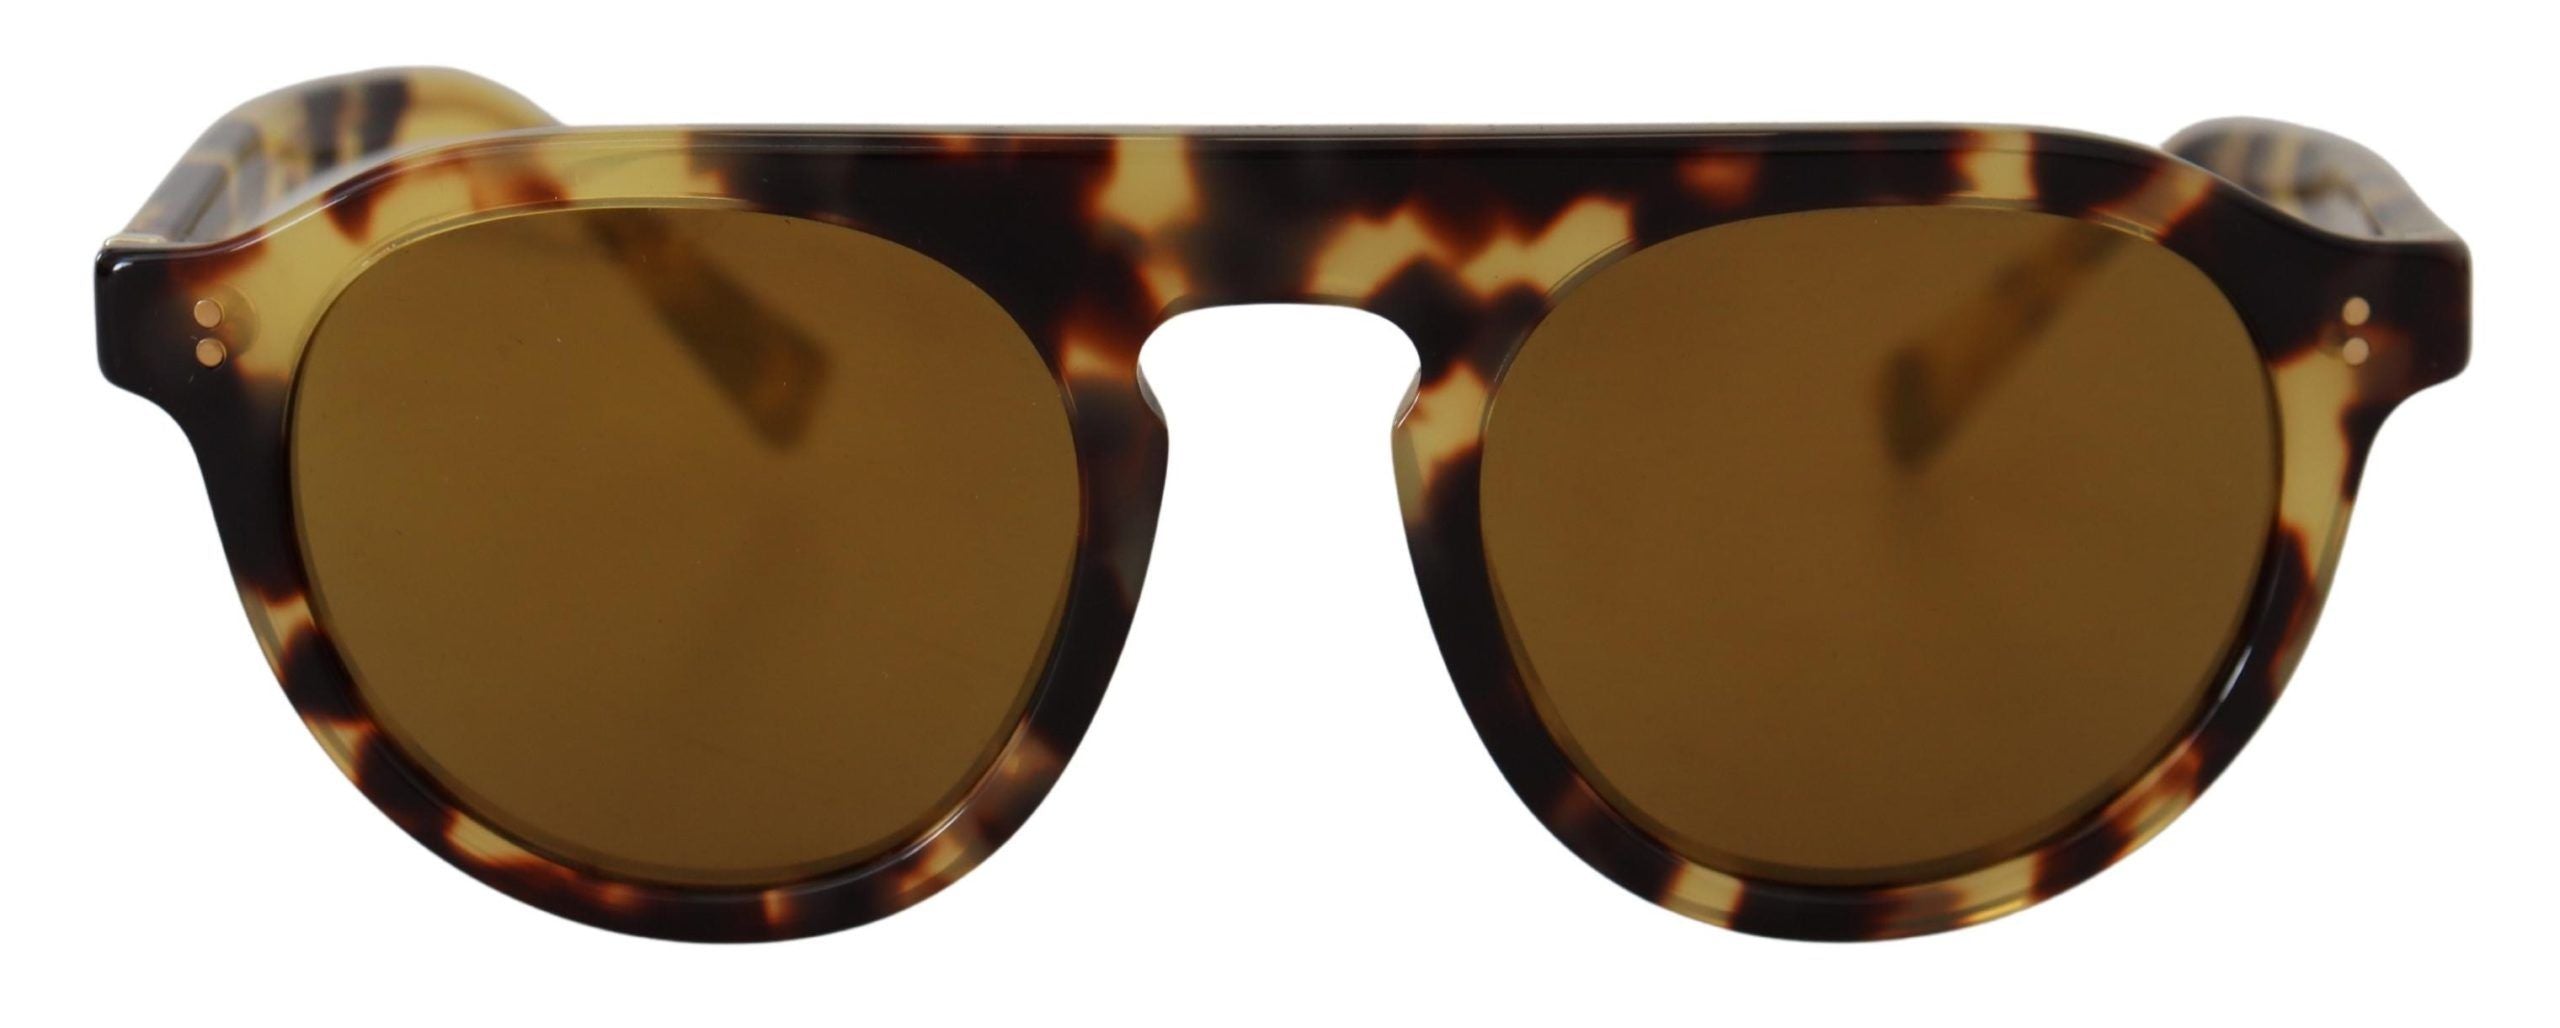 Brown Tortoise Oval Full Rim Shades DG4306F Sunglasses